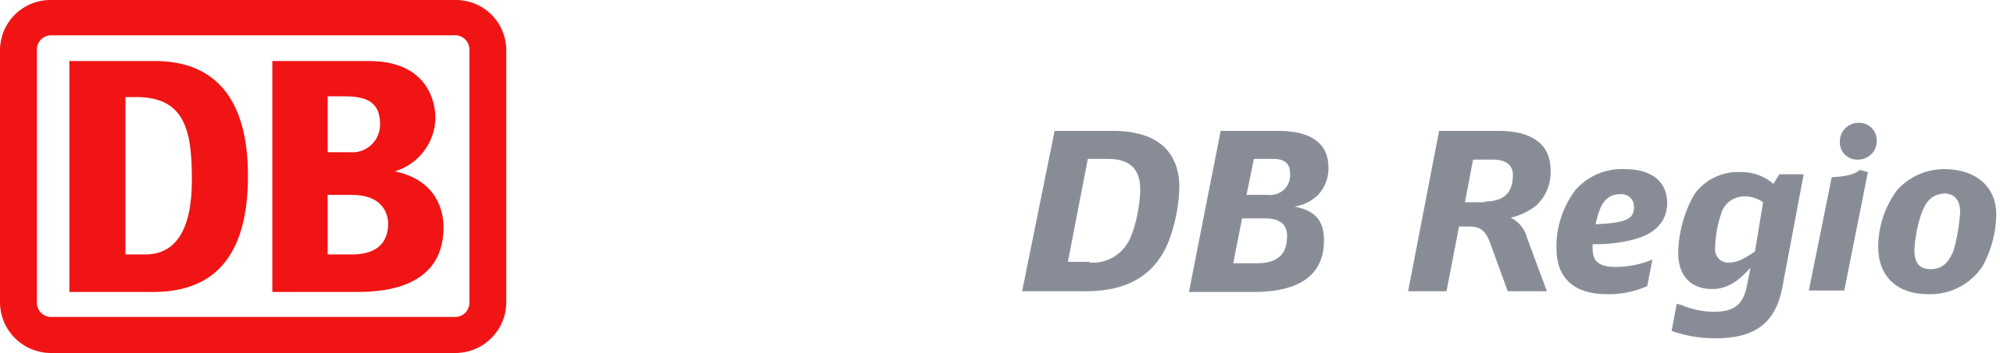 DB_Regio_logo.svg